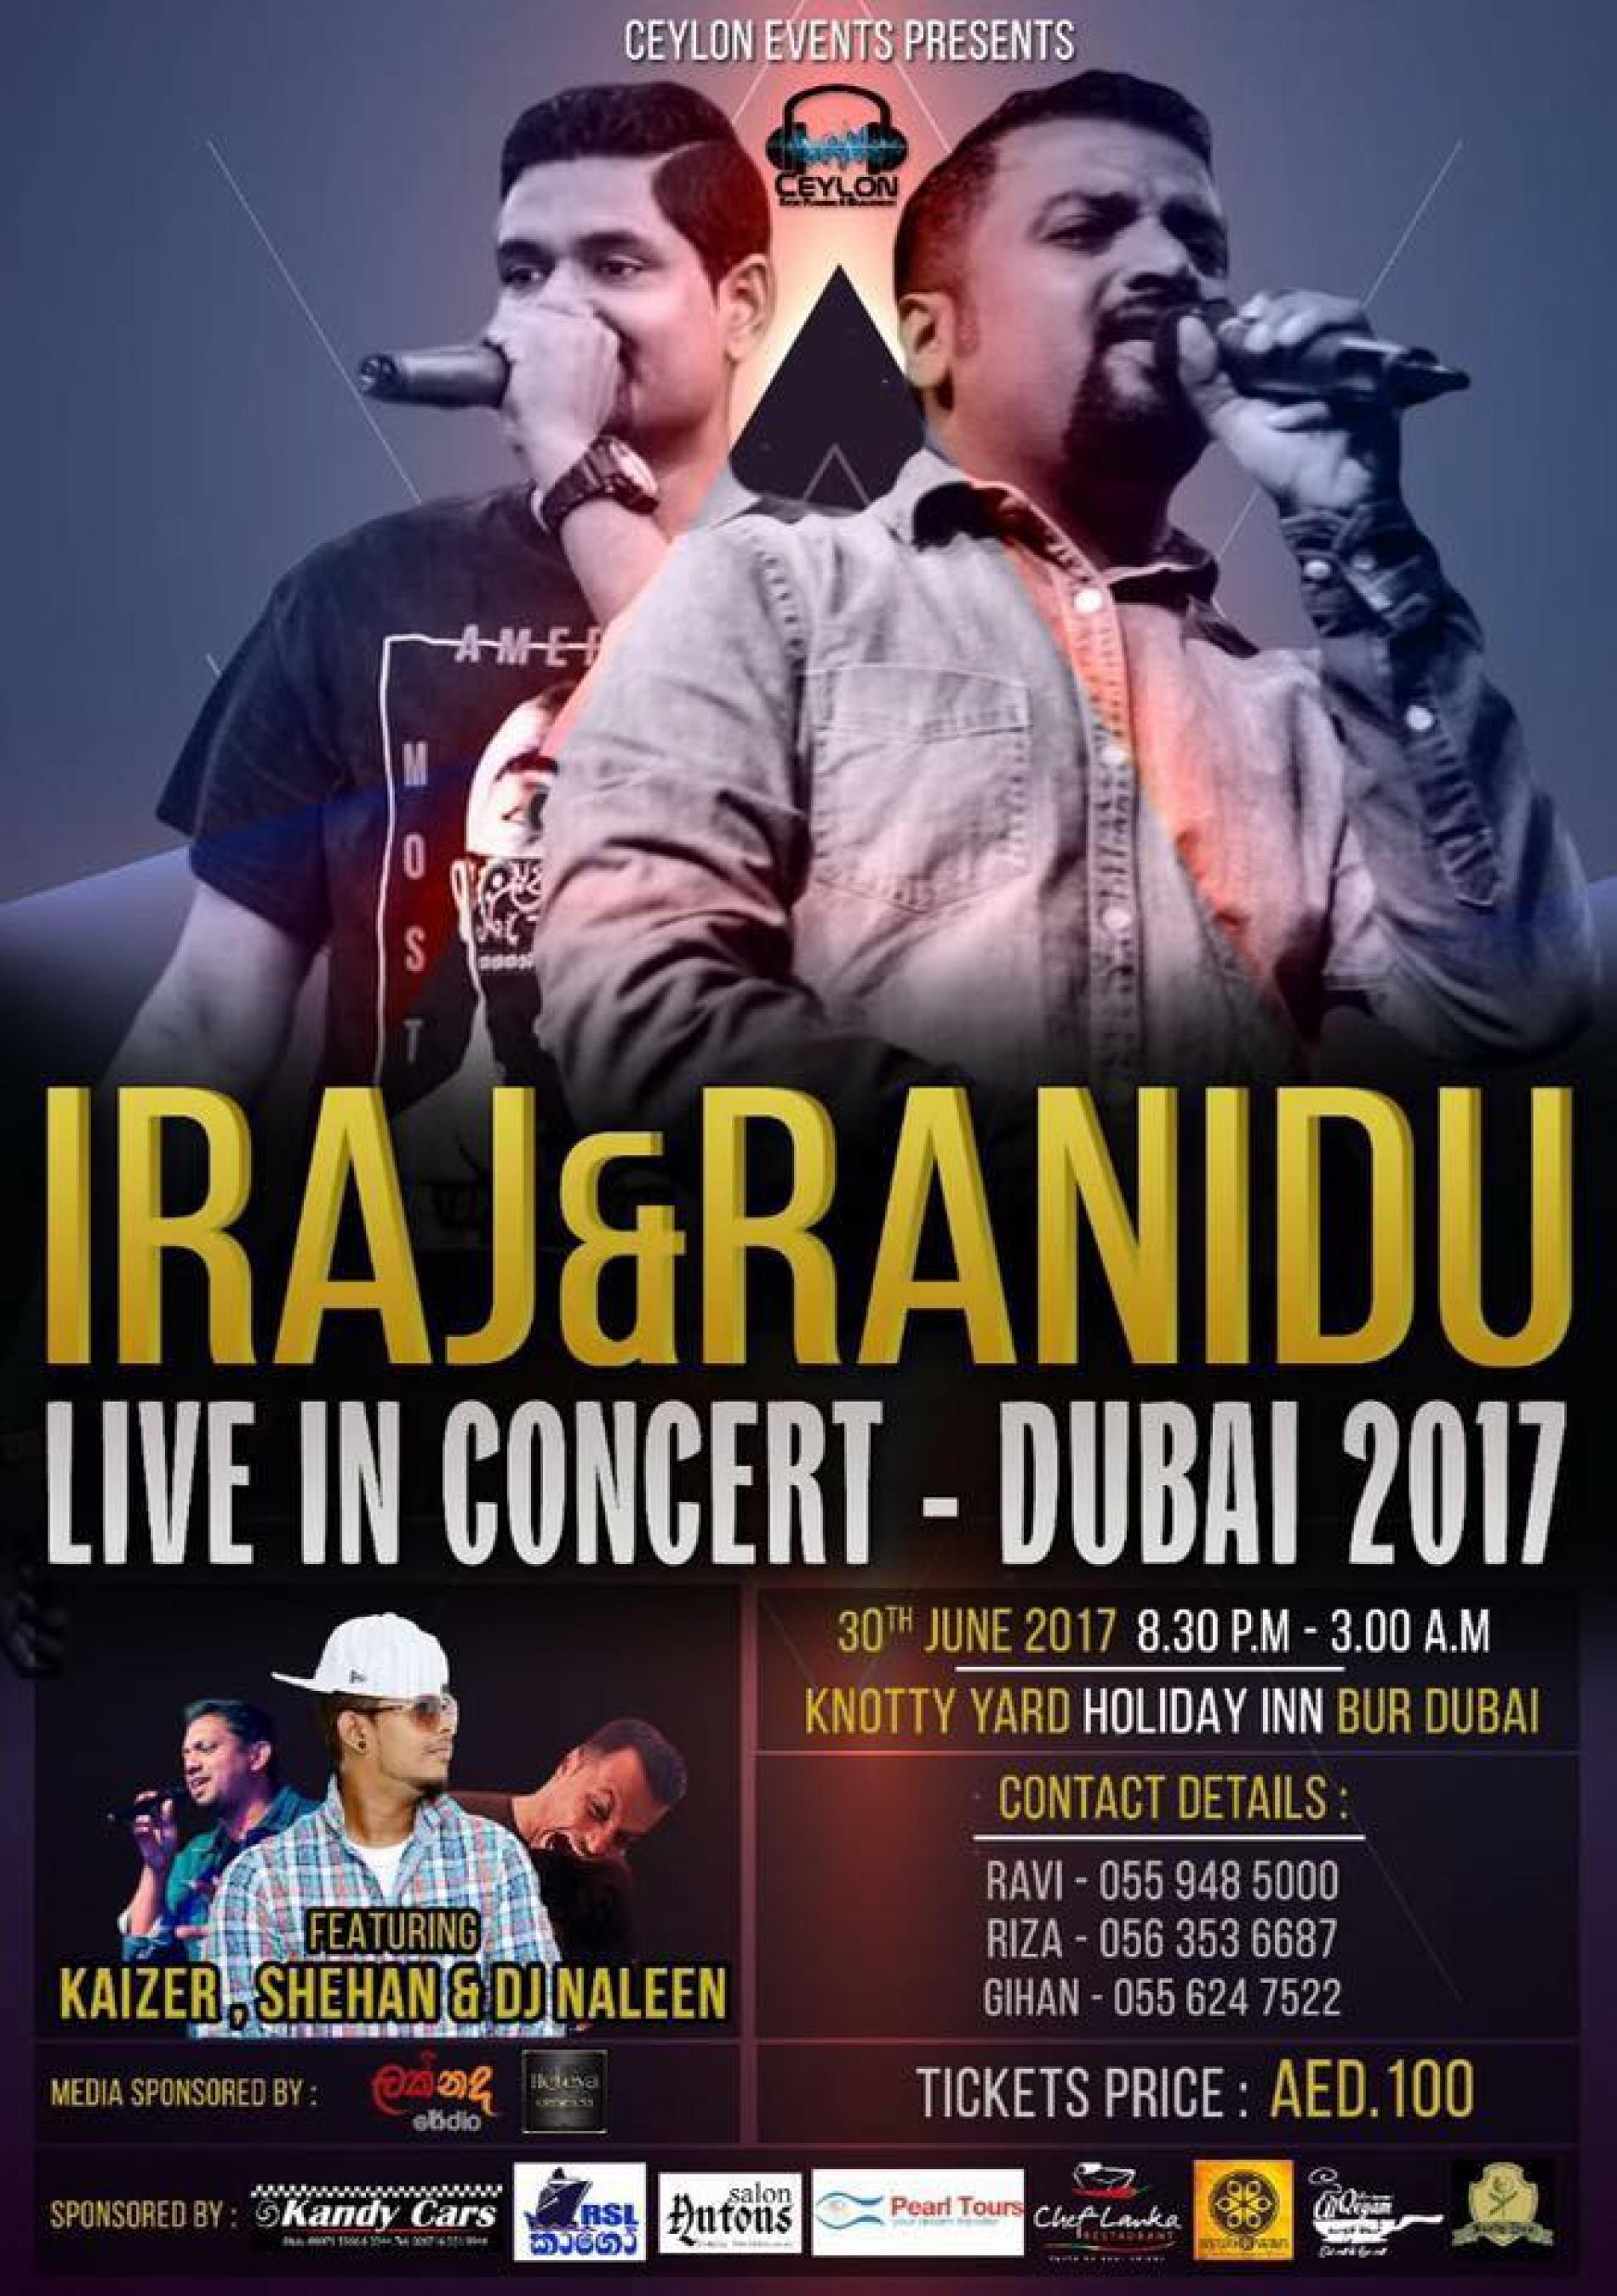 Iraj & Ranidu Live In Concert (dubai)